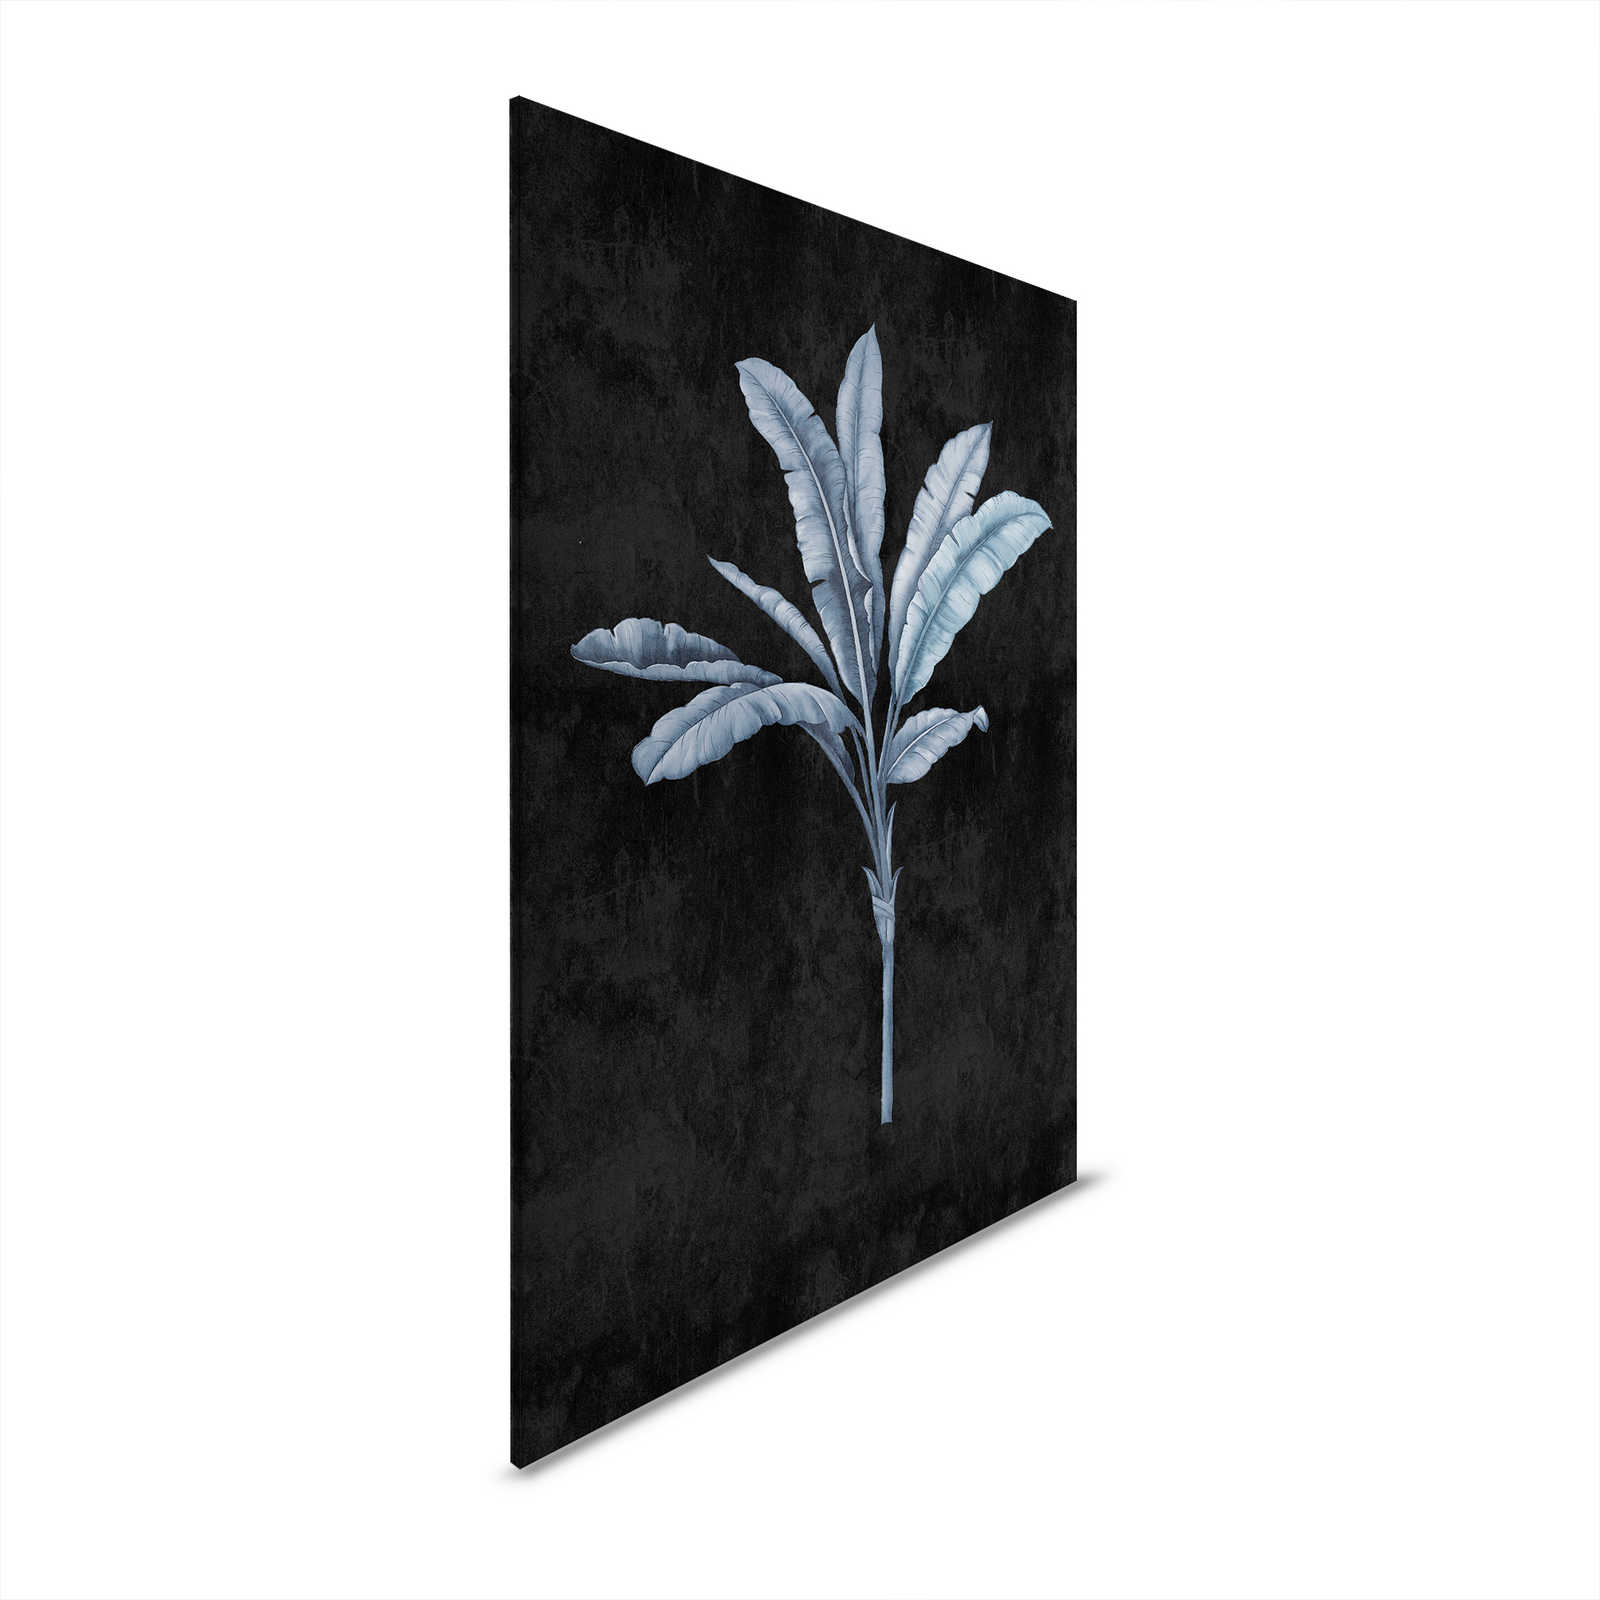 Fiji 2 - Cuadro en lienzo Negro con motivo Palma Gris Azul - 0,80 m x 1,20 m
